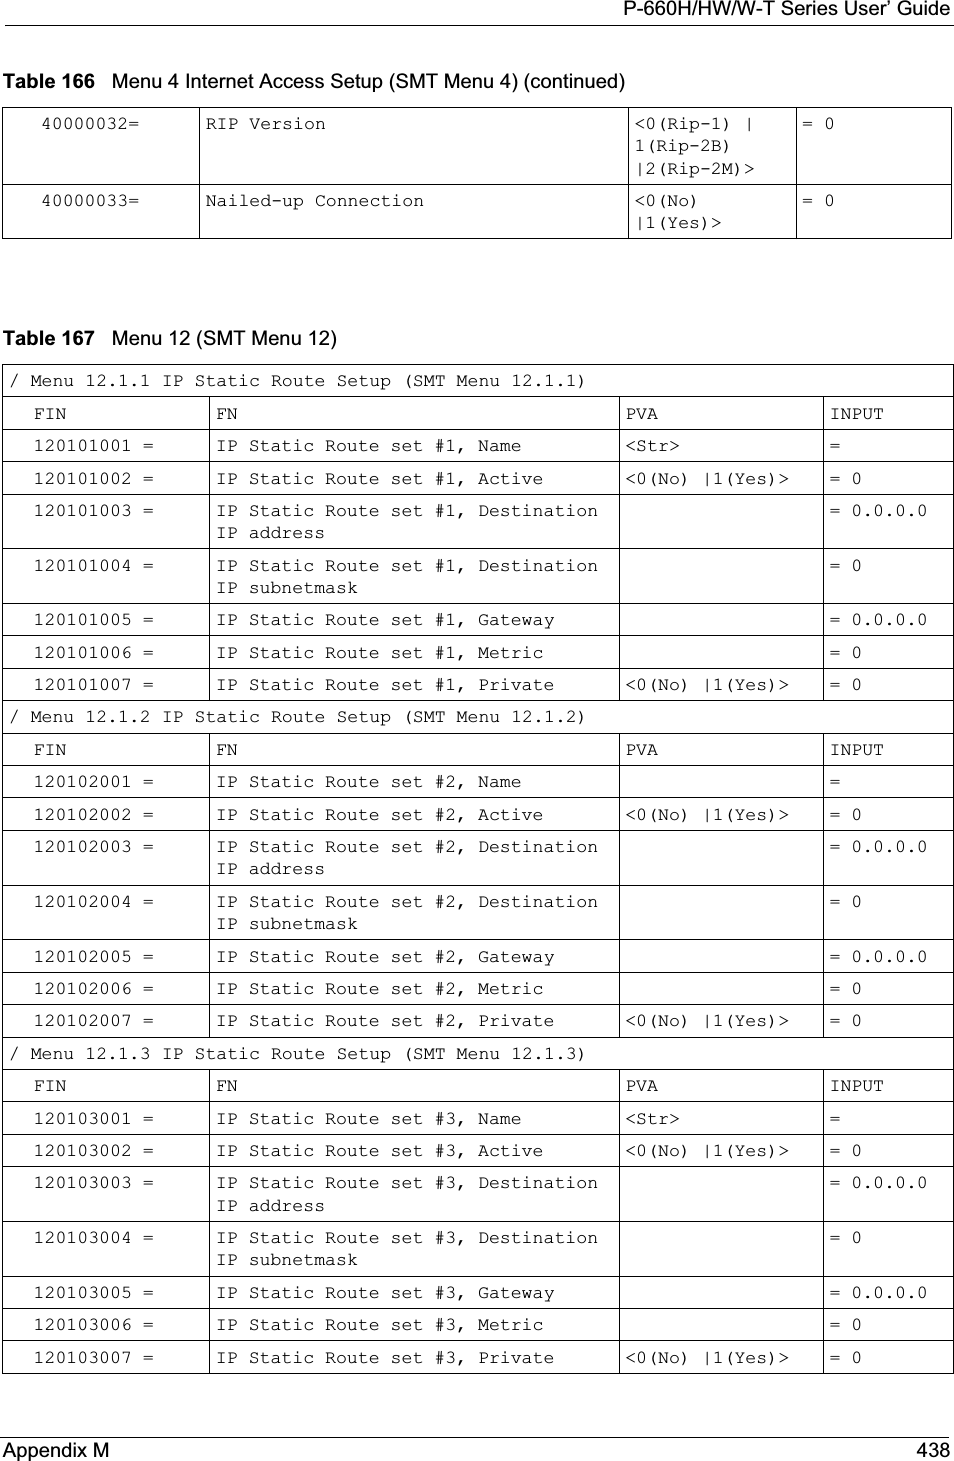 P-660H/HW/W-T Series User’ GuideAppendix M 43840000032= RIP Version  &lt;0(Rip-1) | 1(Rip-2B) |2(Rip-2M)&gt; = 040000033= Nailed-up Connection  &lt;0(No) |1(Yes)&gt;= 0Table 166   Menu 4 Internet Access Setup (SMT Menu 4) (continued)Table 167   Menu 12 (SMT Menu 12)/ Menu 12.1.1 IP Static Route Setup (SMT Menu 12.1.1)FIN FN PVA INPUT120101001 = IP Static Route set #1, Name  &lt;Str&gt; =120101002 = IP Static Route set #1, Active &lt;0(No) |1(Yes)&gt;  = 0120101003 = IP Static Route set #1, Destination IP address = 0.0.0.0120101004 = IP Static Route set #1, Destination IP subnetmask = 0120101005 = IP Static Route set #1, Gateway  = 0.0.0.0120101006 = IP Static Route set #1, Metric  = 0120101007 = IP Static Route set #1, Private &lt;0(No) |1(Yes)&gt;  = 0/ Menu 12.1.2 IP Static Route Setup (SMT Menu 12.1.2)FIN FN PVA INPUT120102001 = IP Static Route set #2, Name  =120102002 = IP Static Route set #2, Active &lt;0(No) |1(Yes)&gt;  = 0120102003 = IP Static Route set #2, Destination IP address = 0.0.0.0120102004 = IP Static Route set #2, Destination IP subnetmask = 0120102005 = IP Static Route set #2, Gateway  = 0.0.0.0120102006 = IP Static Route set #2, Metric  = 0120102007 = IP Static Route set #2, Private &lt;0(No) |1(Yes)&gt;  = 0/ Menu 12.1.3 IP Static Route Setup (SMT Menu 12.1.3)FIN FN PVA INPUT120103001 = IP Static Route set #3, Name  &lt;Str&gt; =120103002 = IP Static Route set #3, Active  &lt;0(No) |1(Yes)&gt;  = 0120103003 = IP Static Route set #3, Destination IP address = 0.0.0.0120103004 = IP Static Route set #3, Destination IP subnetmask = 0120103005 = IP Static Route set #3, Gateway  = 0.0.0.0120103006 = IP Static Route set #3, Metric  = 0120103007 = IP Static Route set #3, Private &lt;0(No) |1(Yes)&gt;  = 0